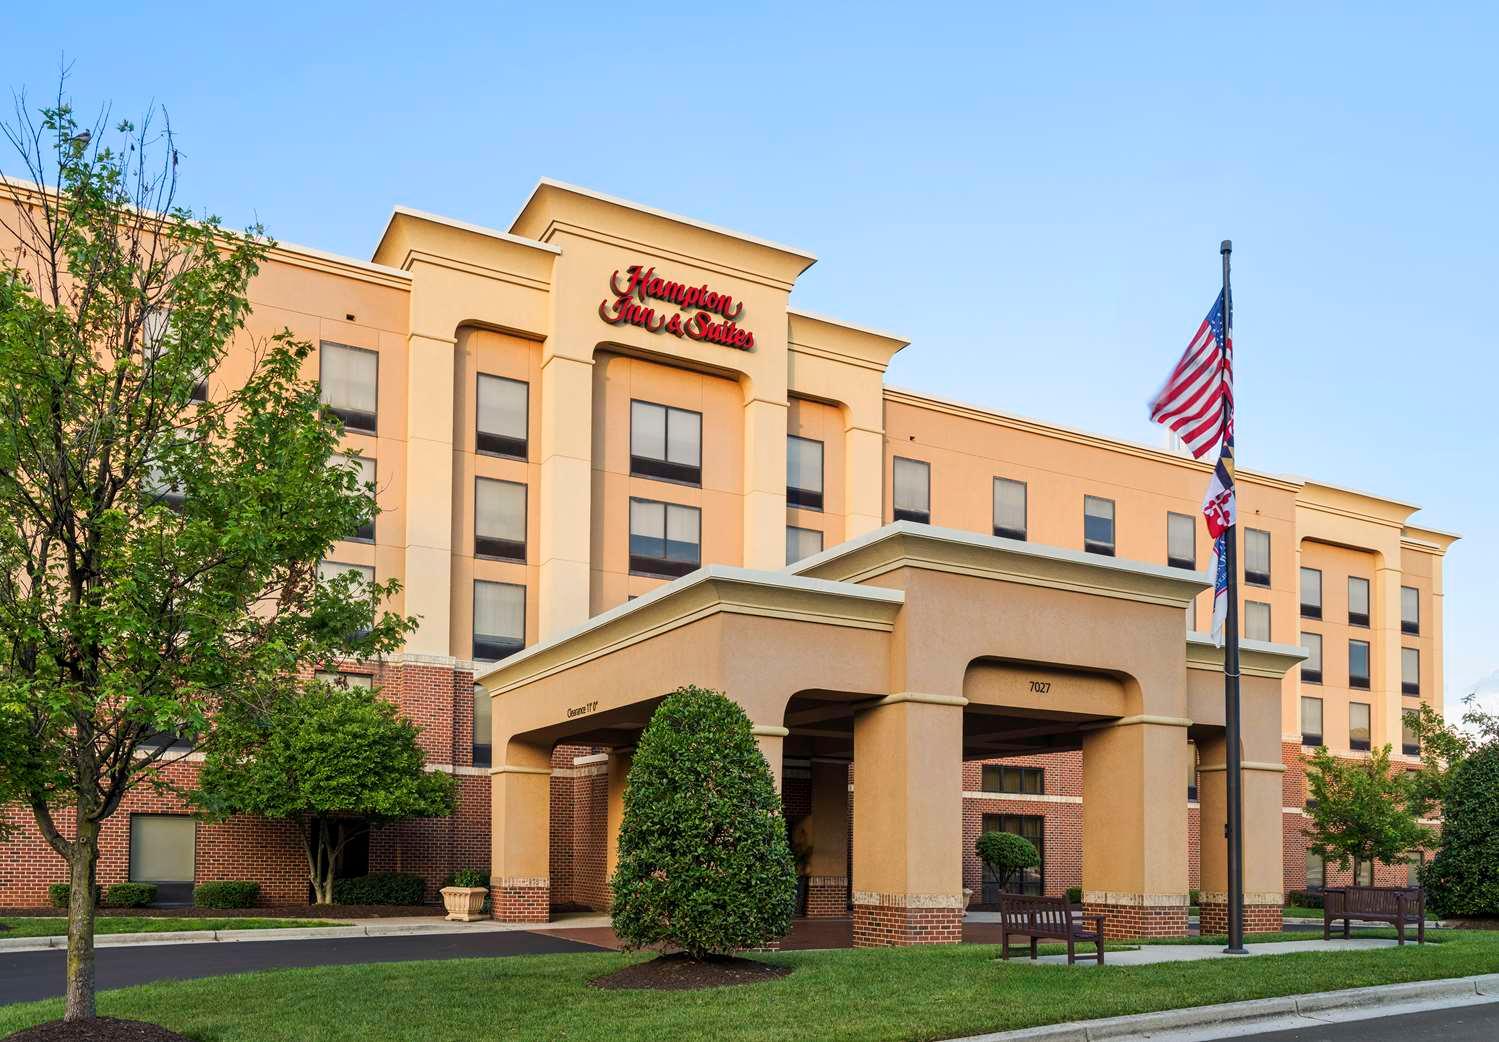 Hampton Inn & Suites Arundel Mills/Baltimore in Hanover, MD